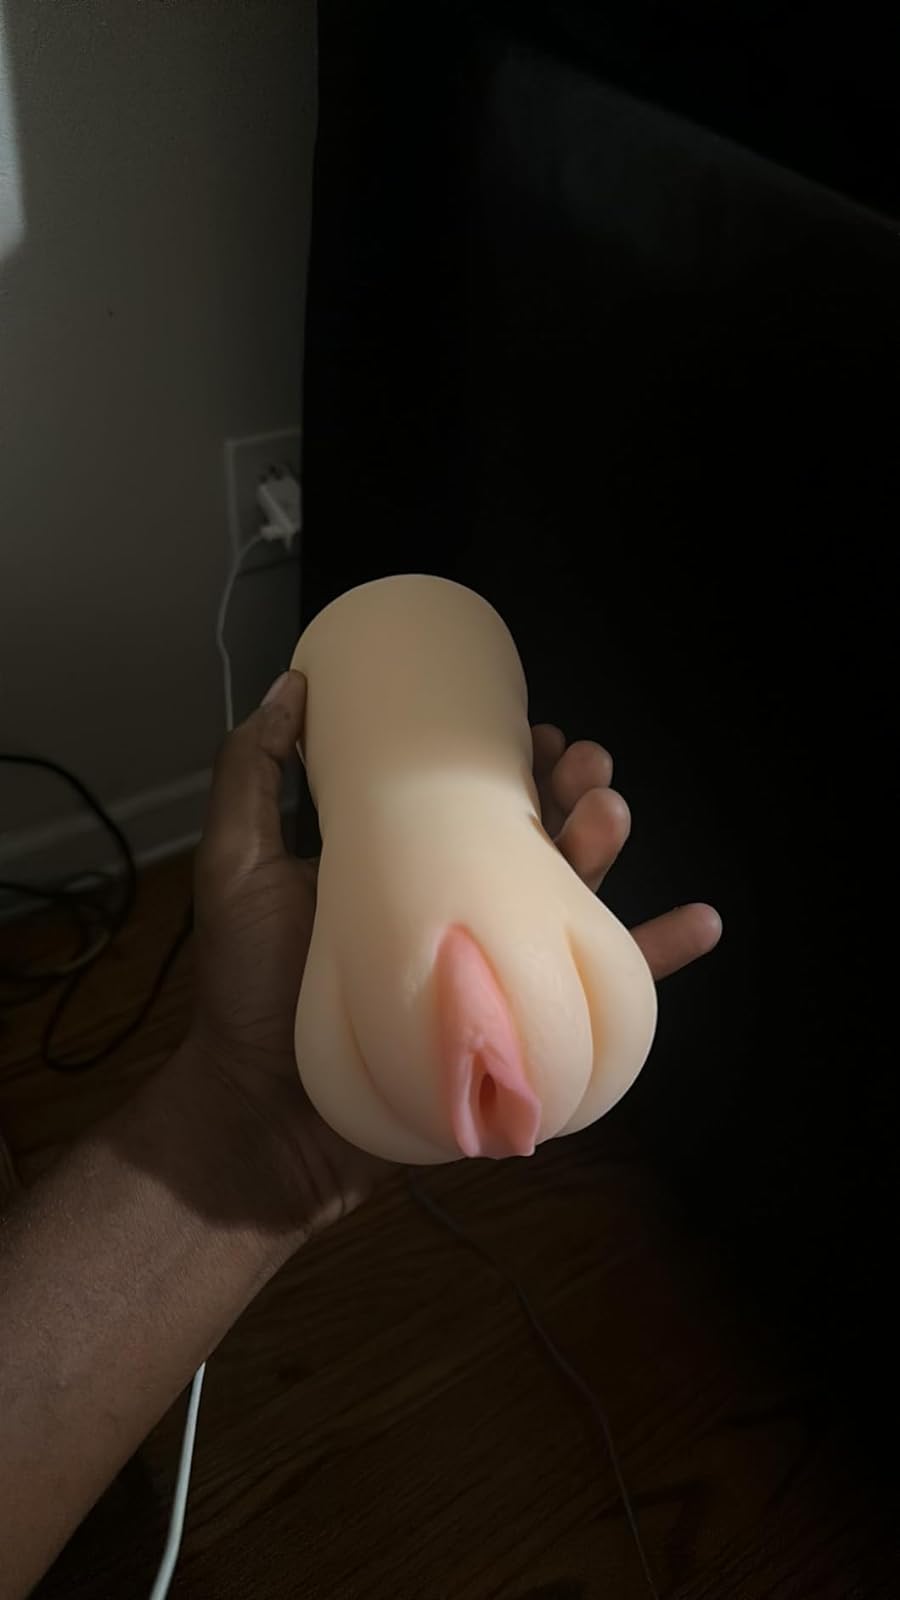 10 inch Fake Penis Remote Control